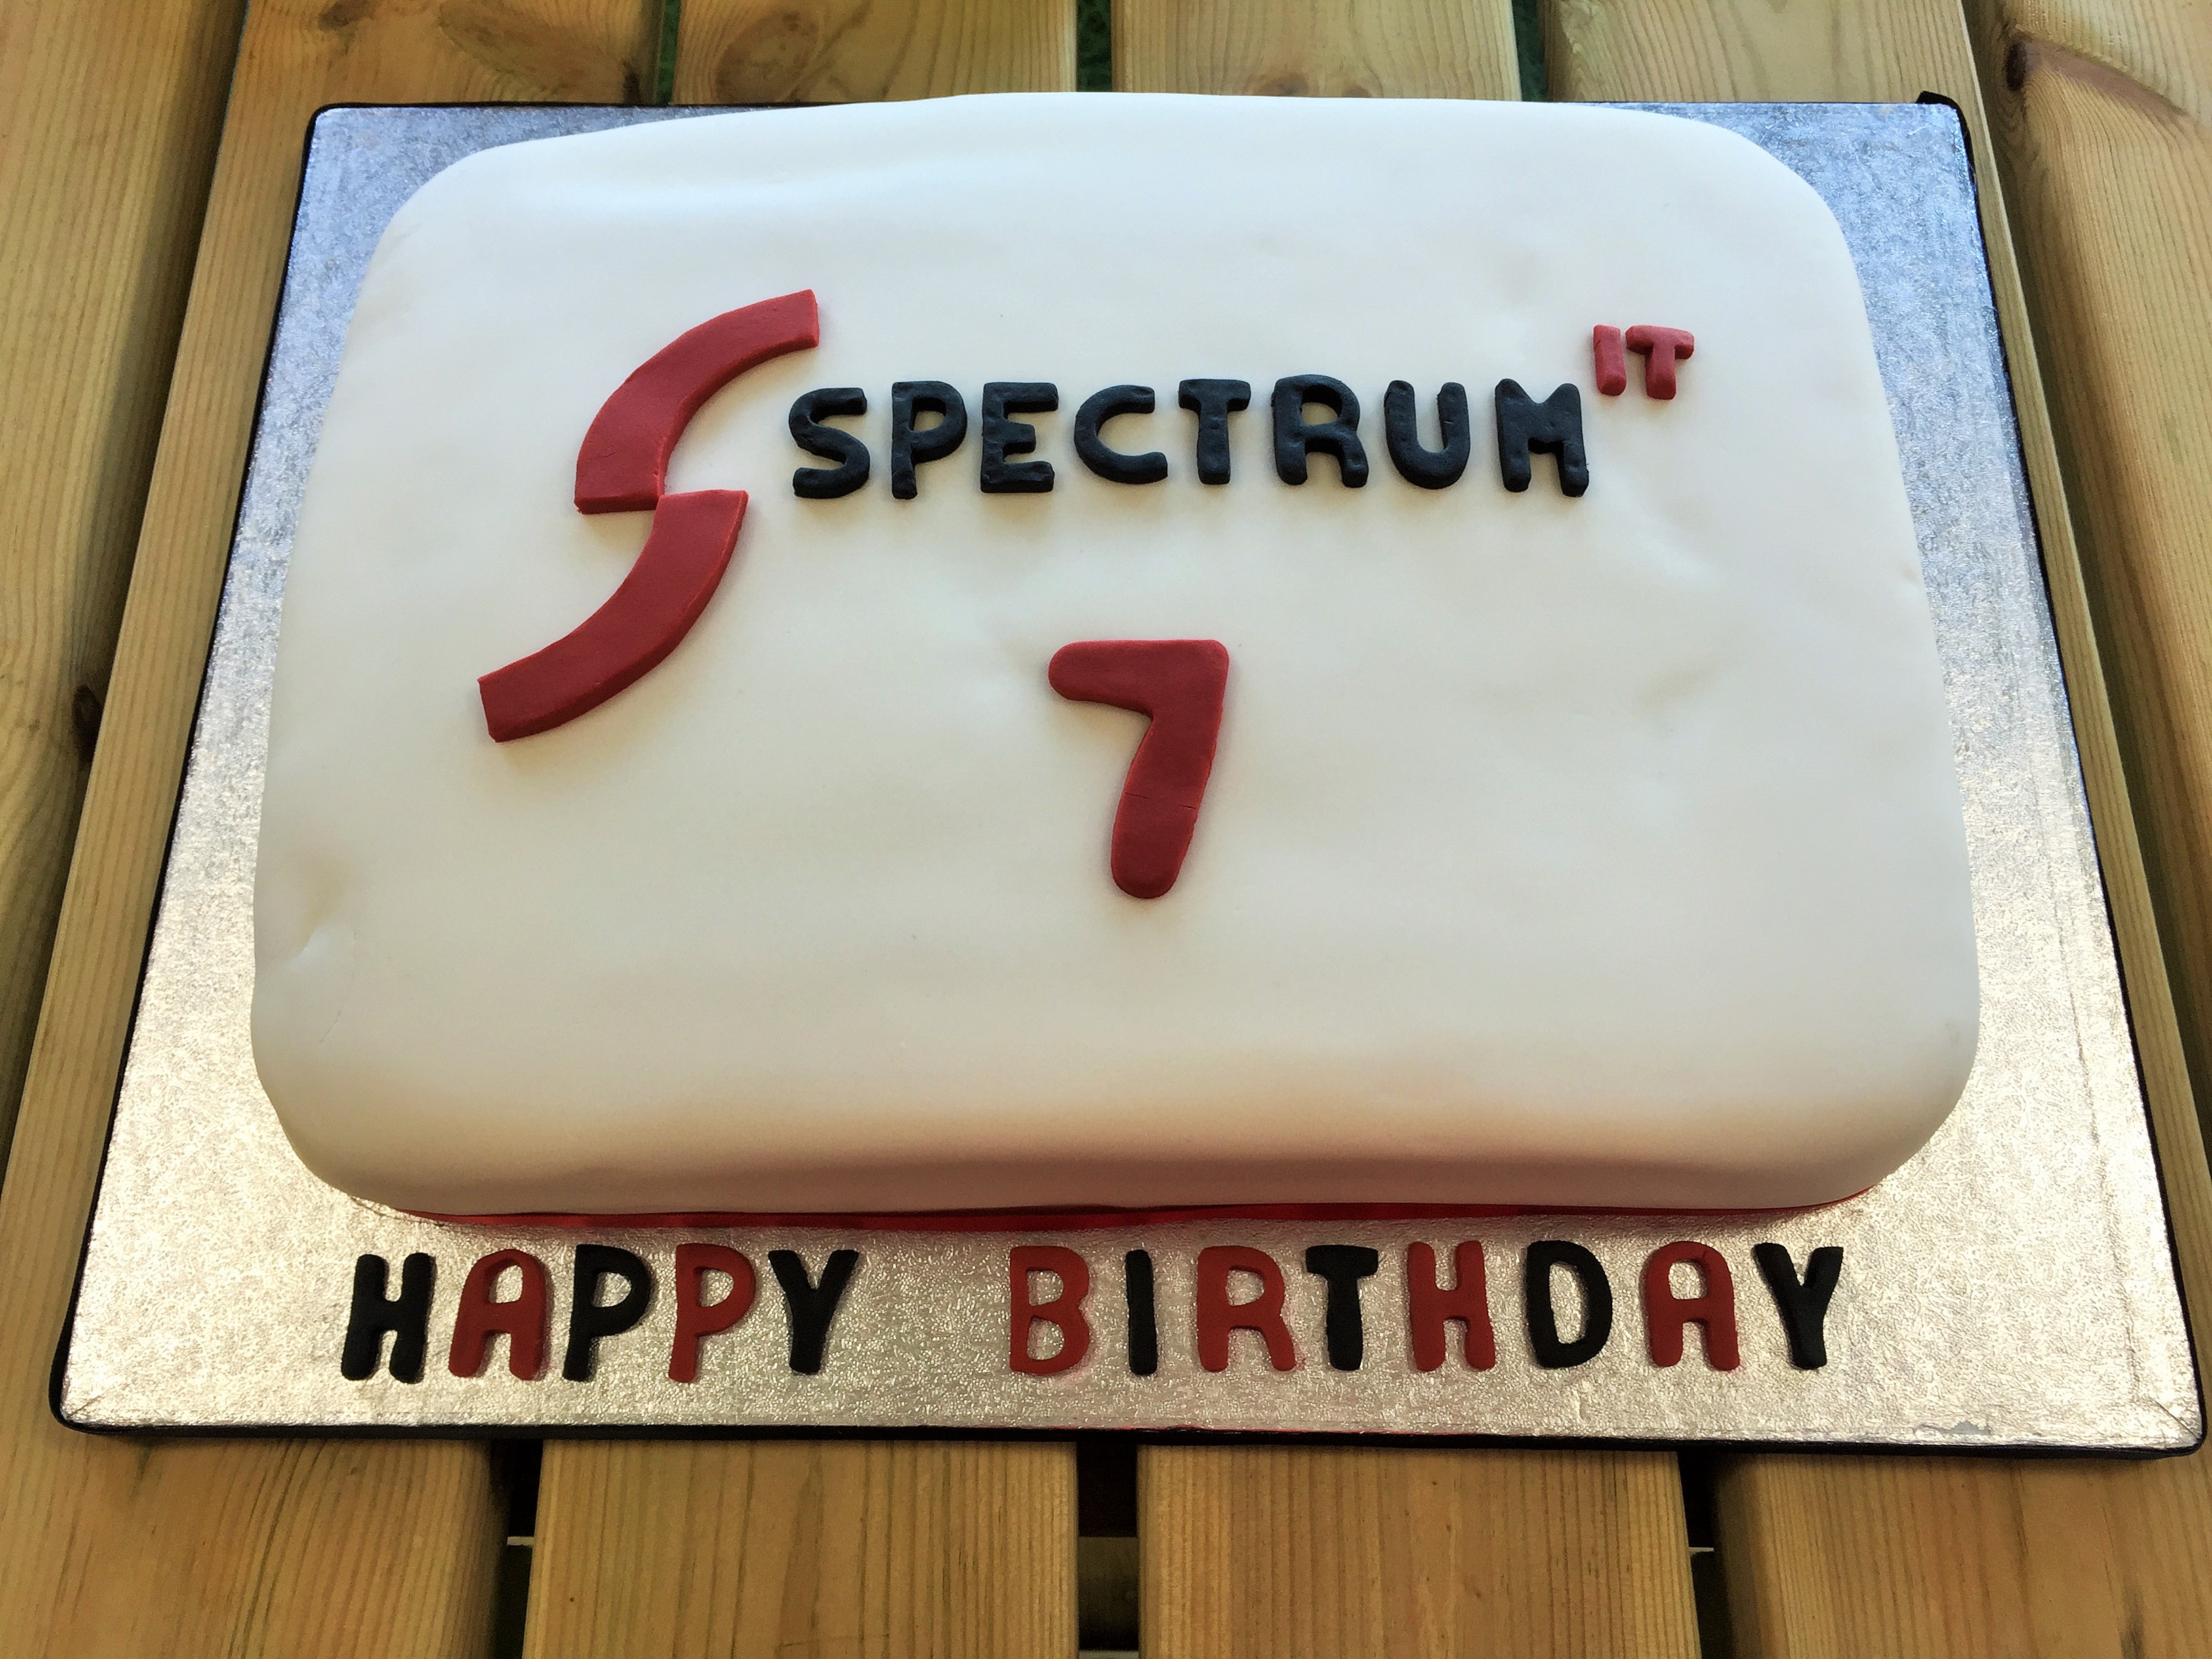 Spectrum IT 7th Birthday Cake